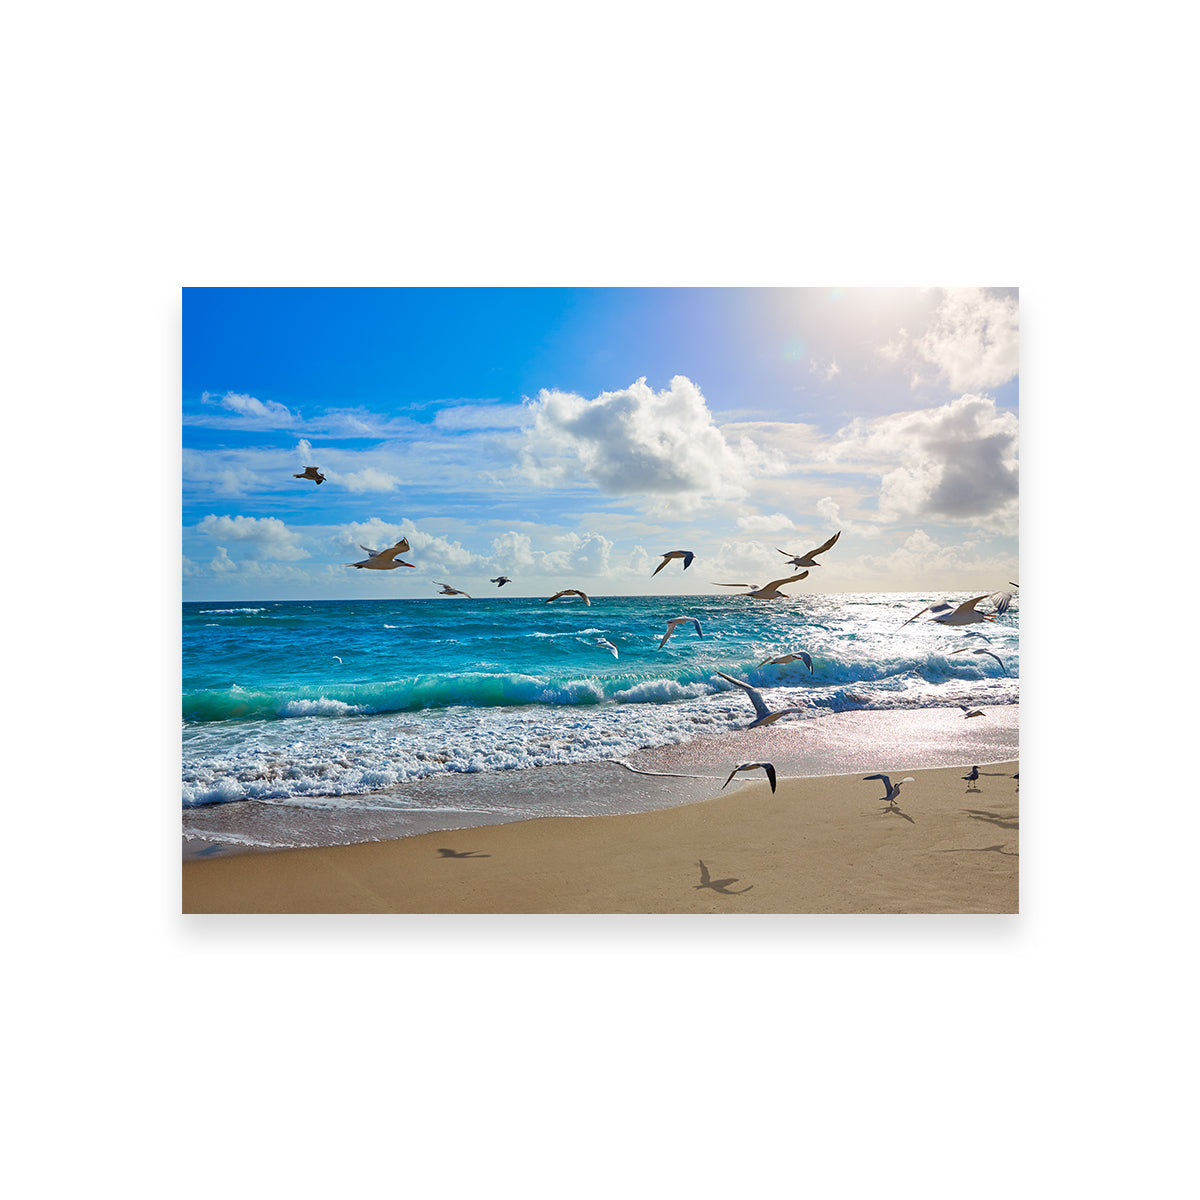 Singer Island Beach Seagulls